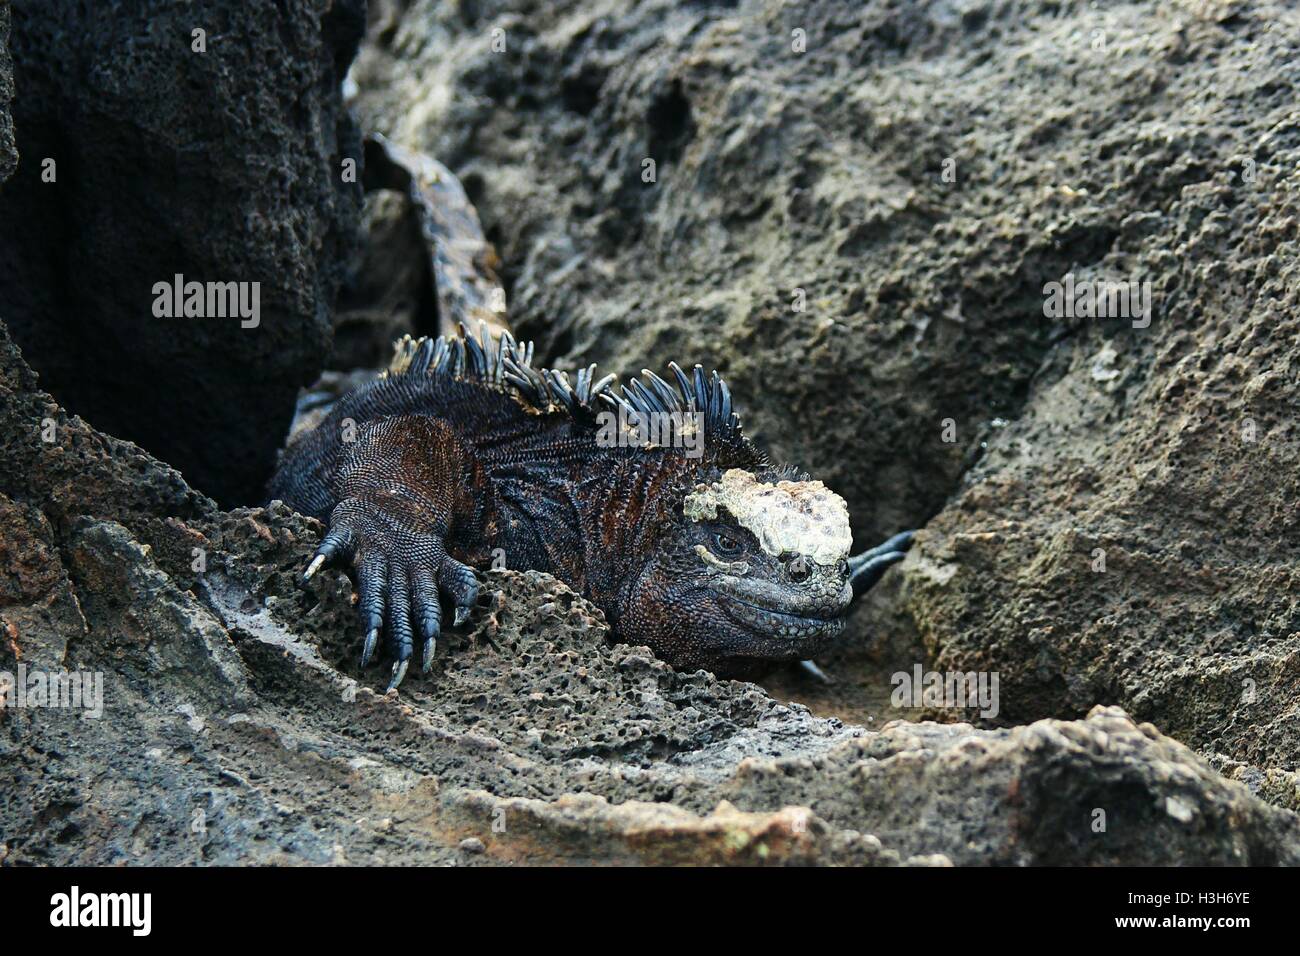 A Galapagos land iguana in between some rocks. Stock Photo